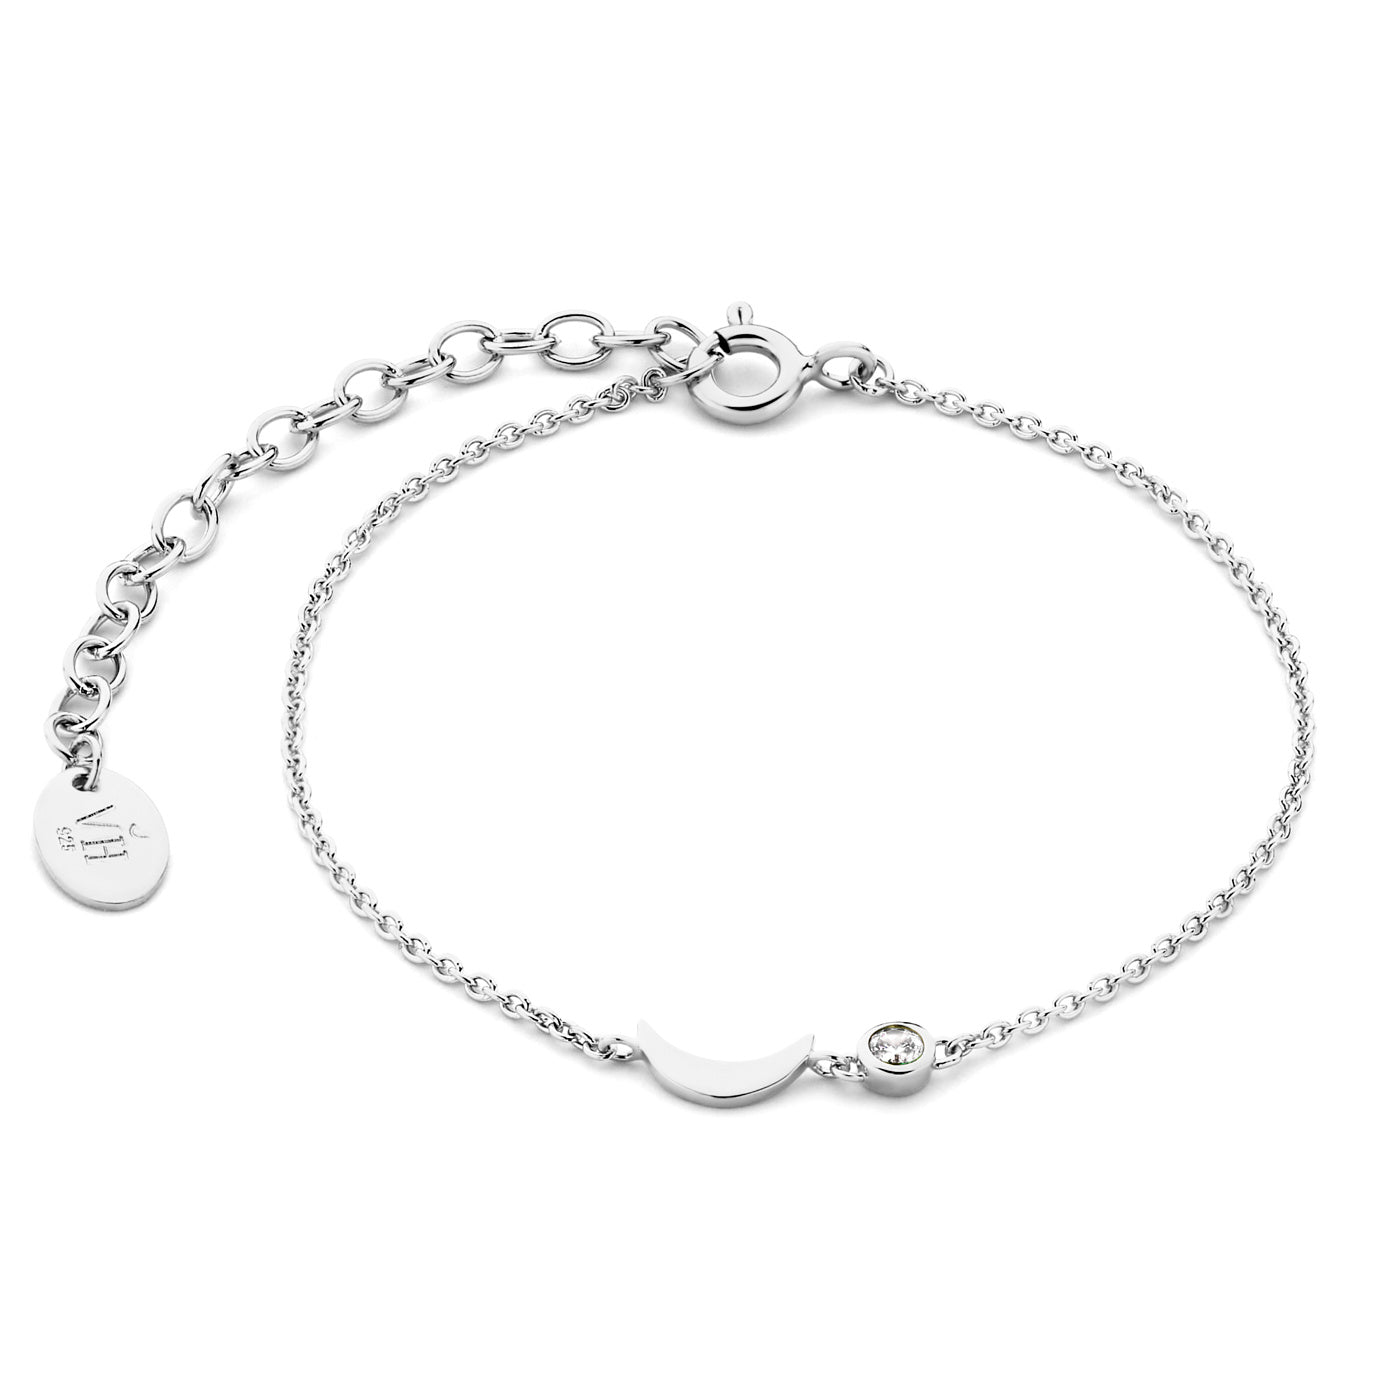 Luna 925 sterling silver bracelet with white zirconia stone